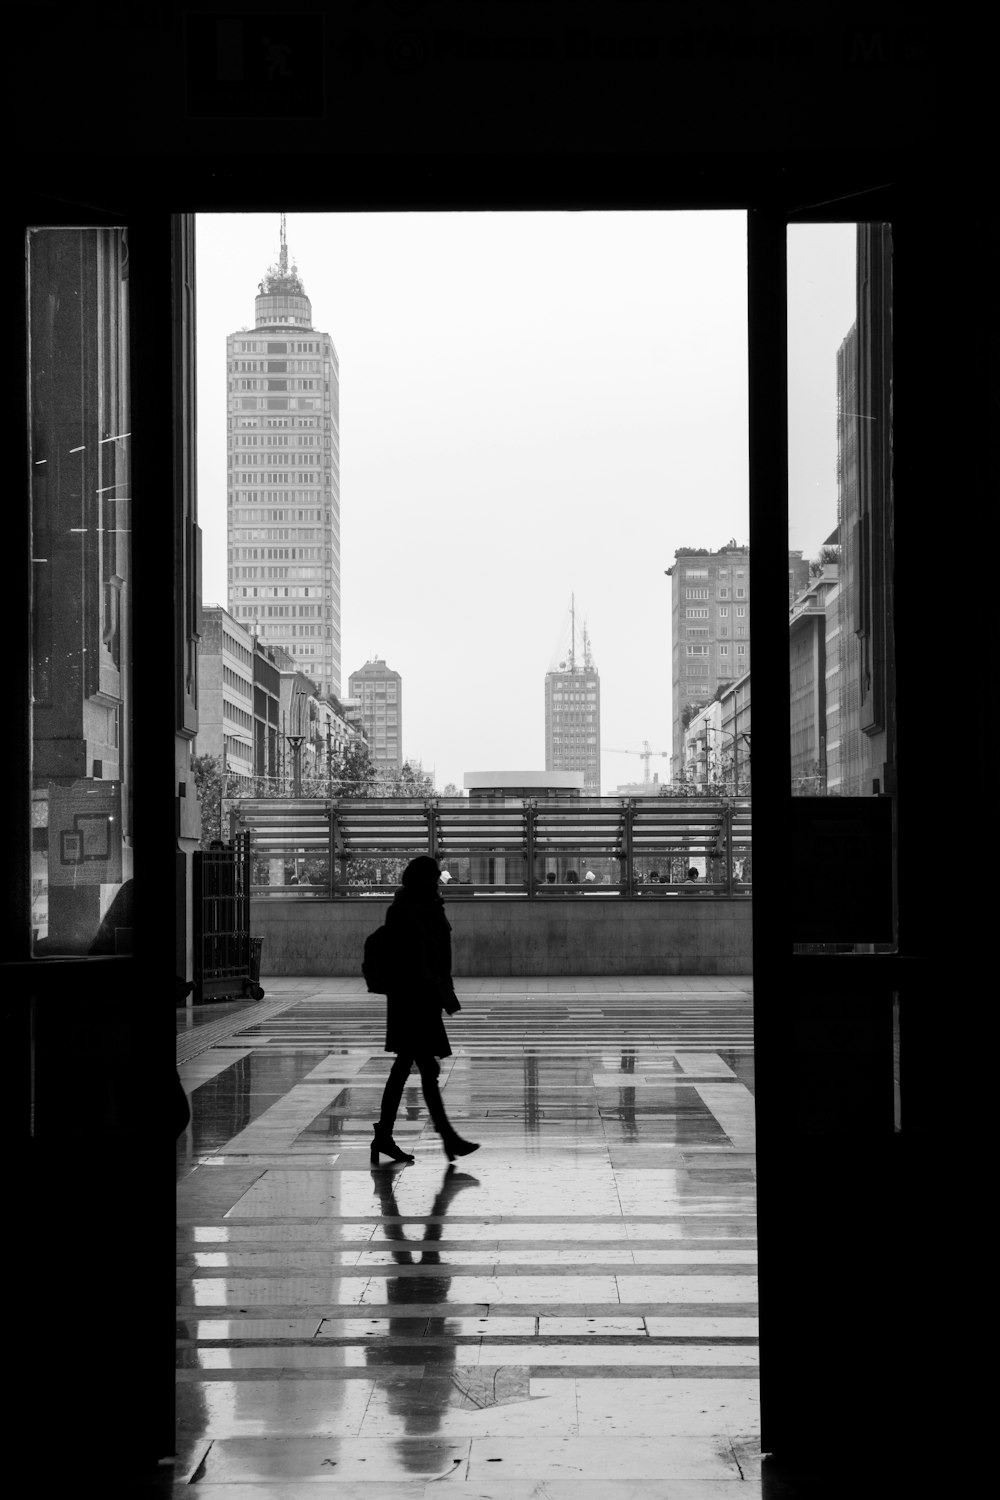 a person walking down a walkway in the rain